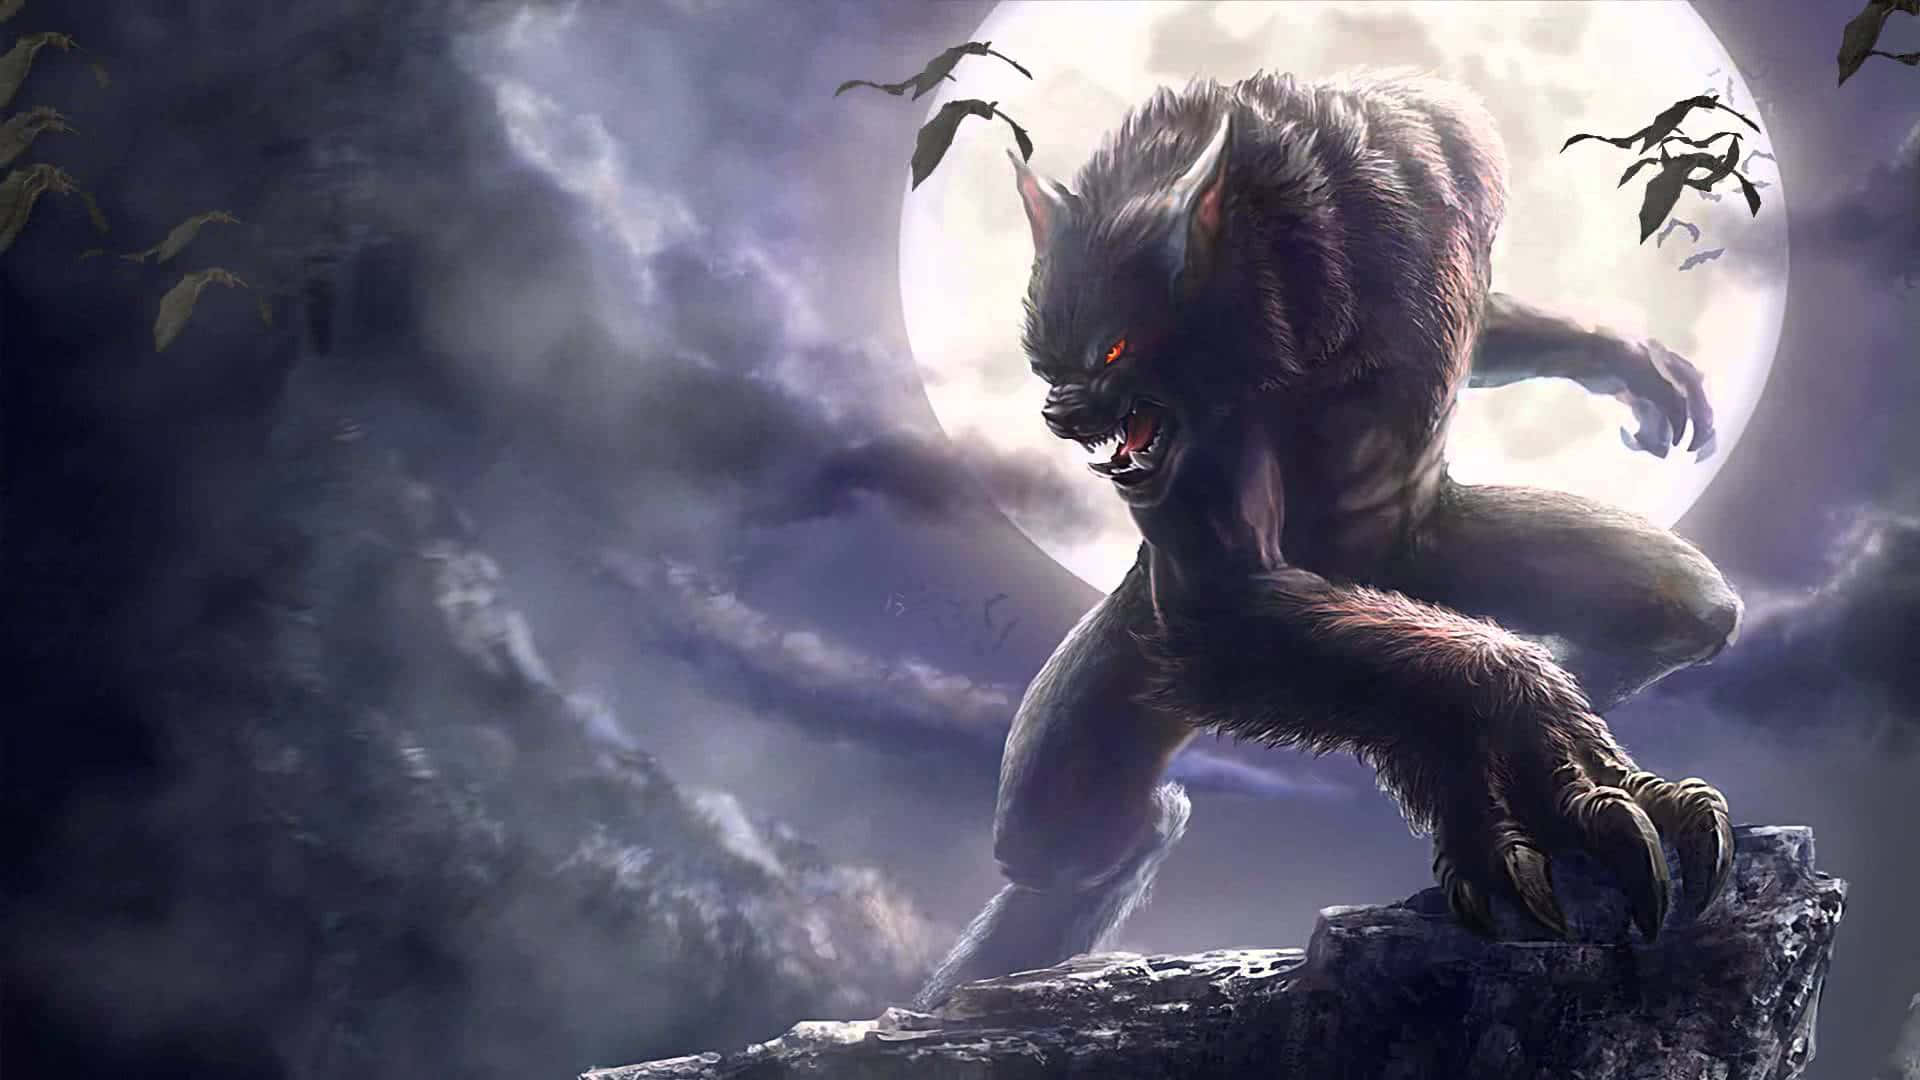 "The mystical werewolf howls at moonlight."